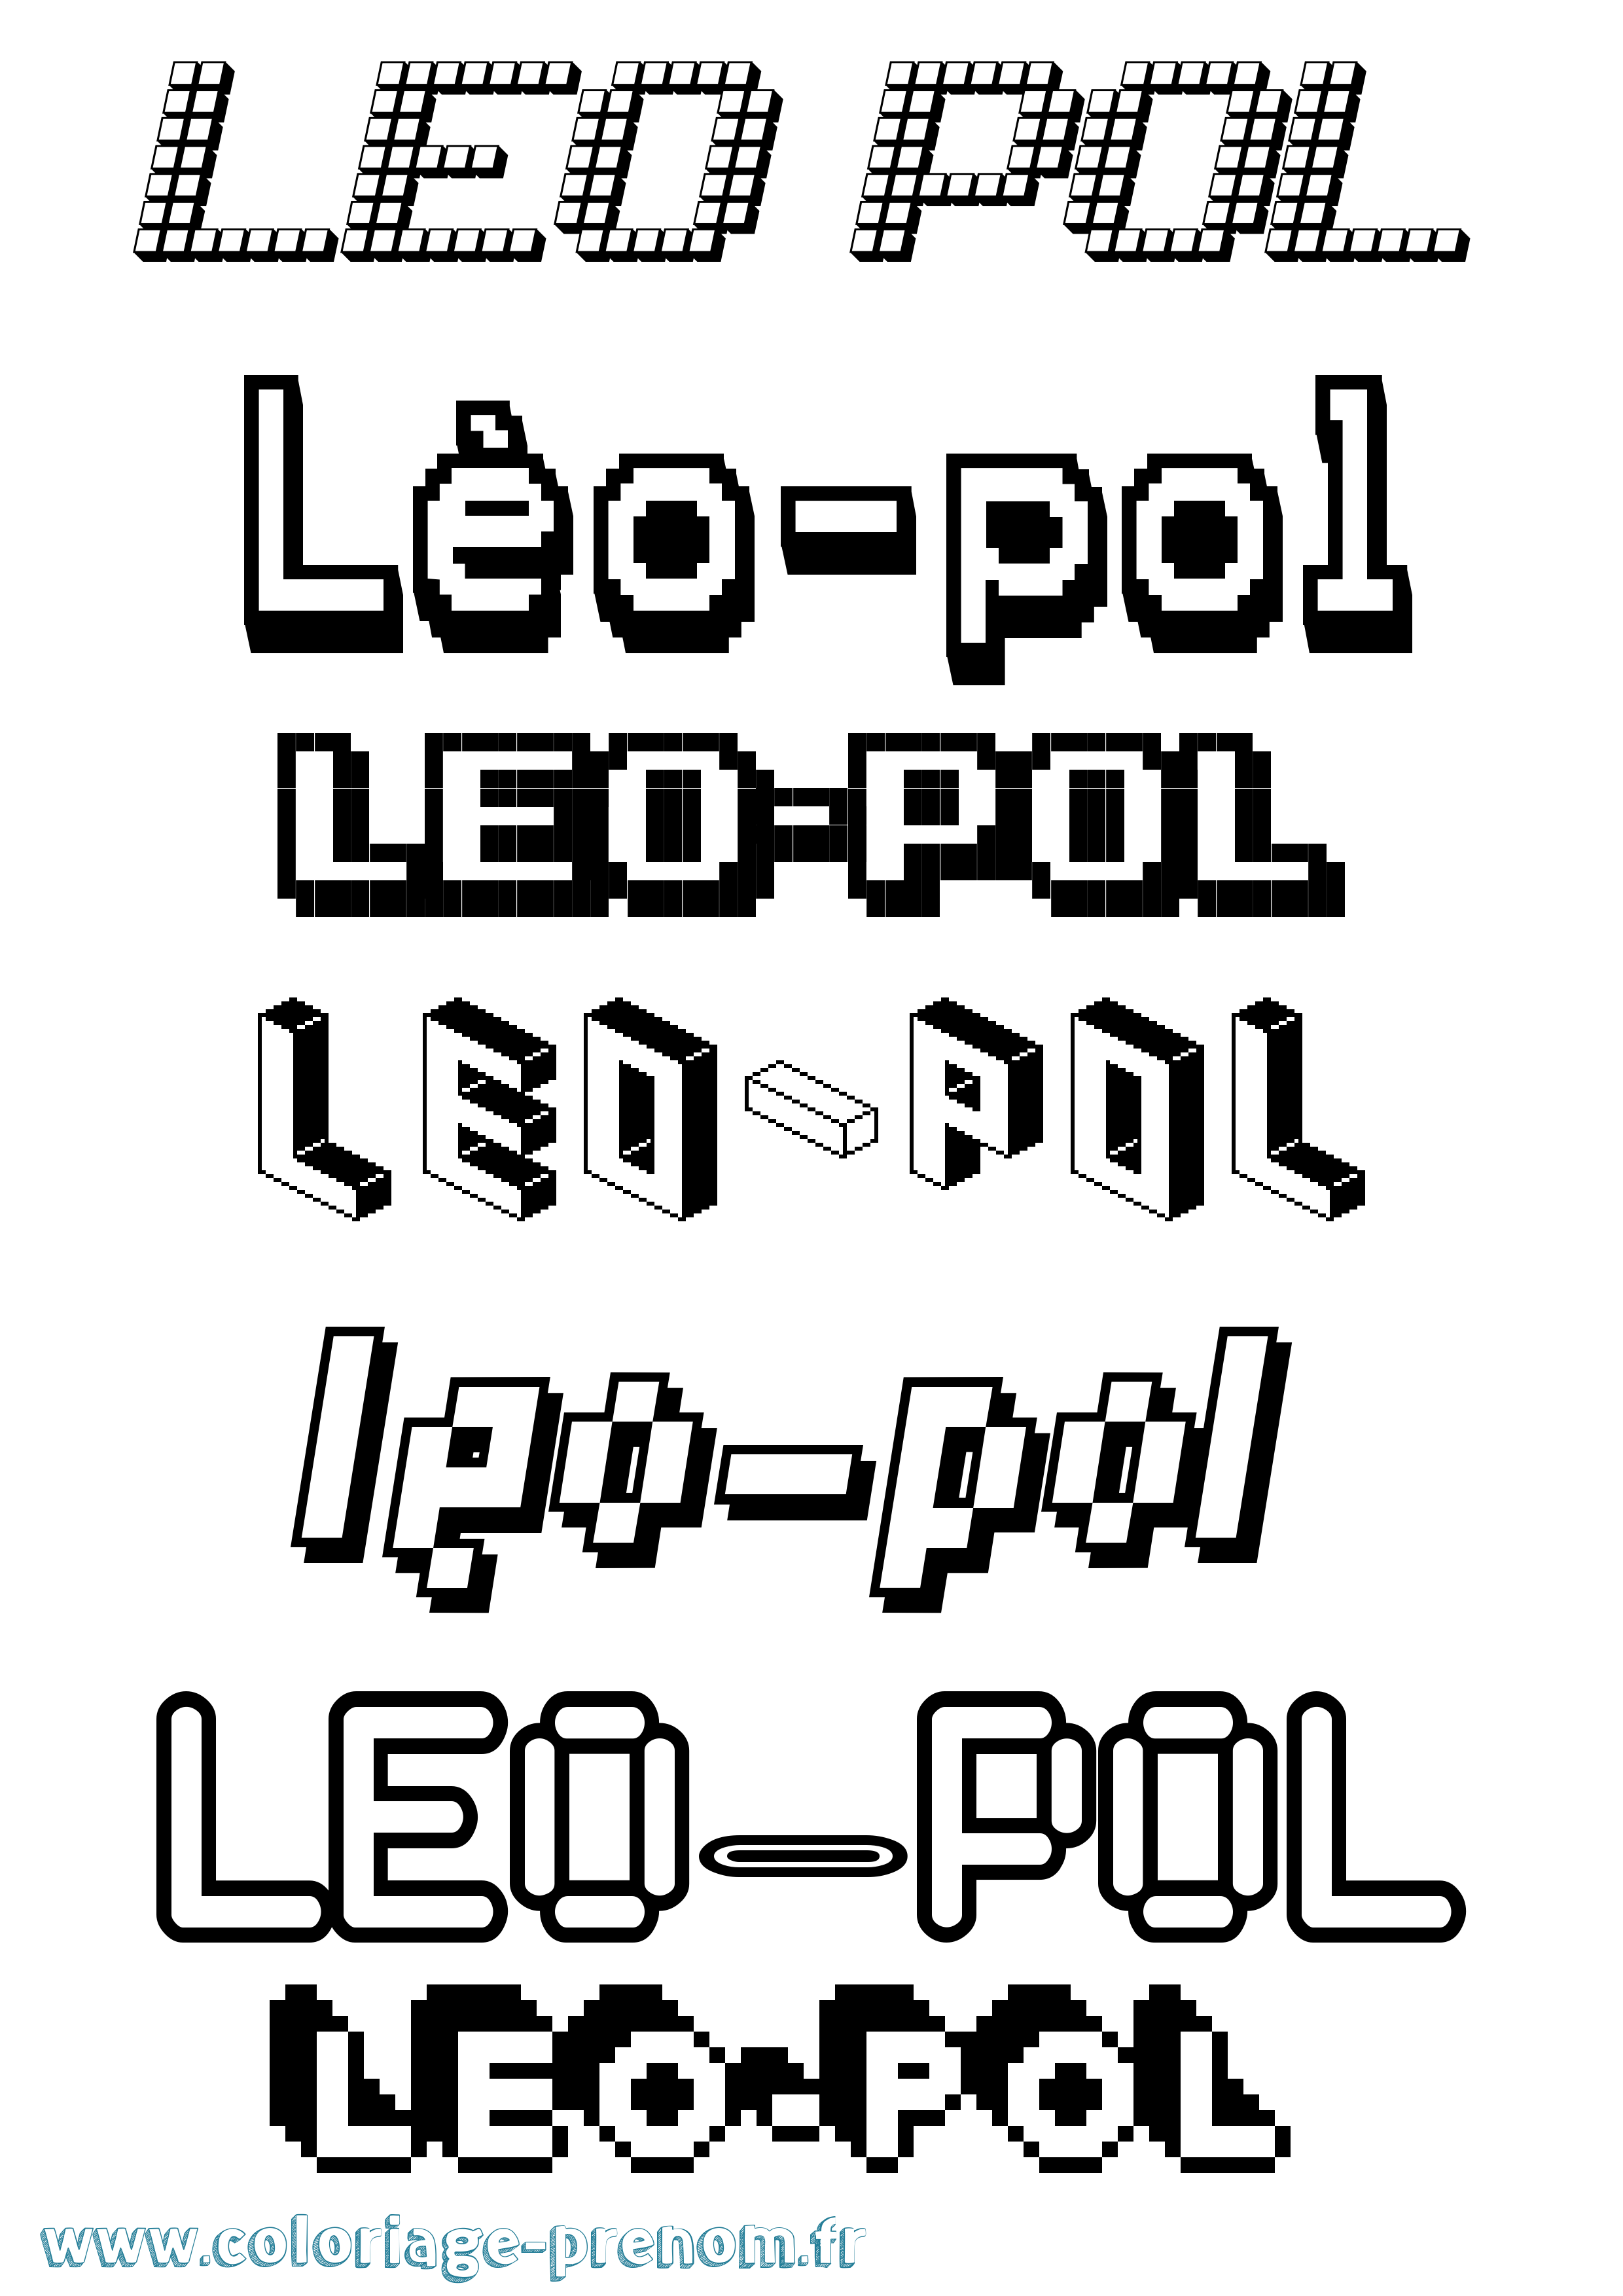 Coloriage prénom Léo-Pol Pixel